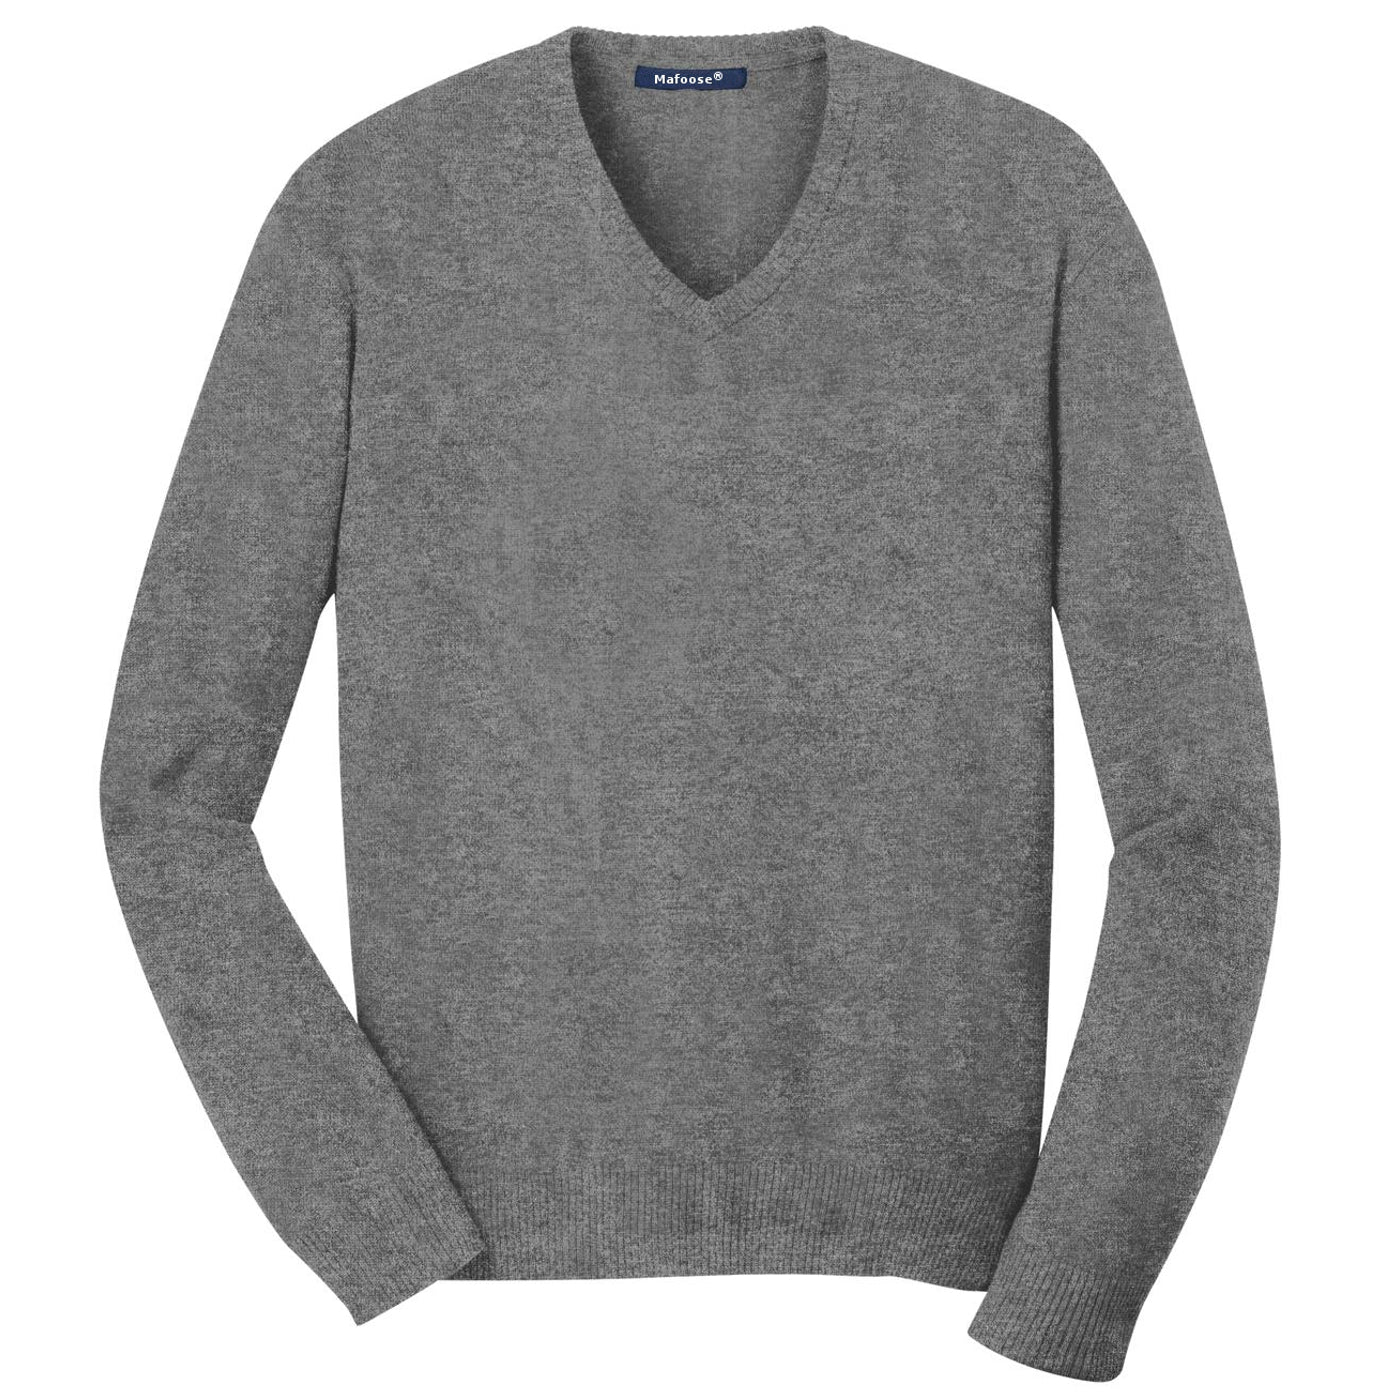 Mafoose Men's V Neck Sweater Medium Heather Grey-Front